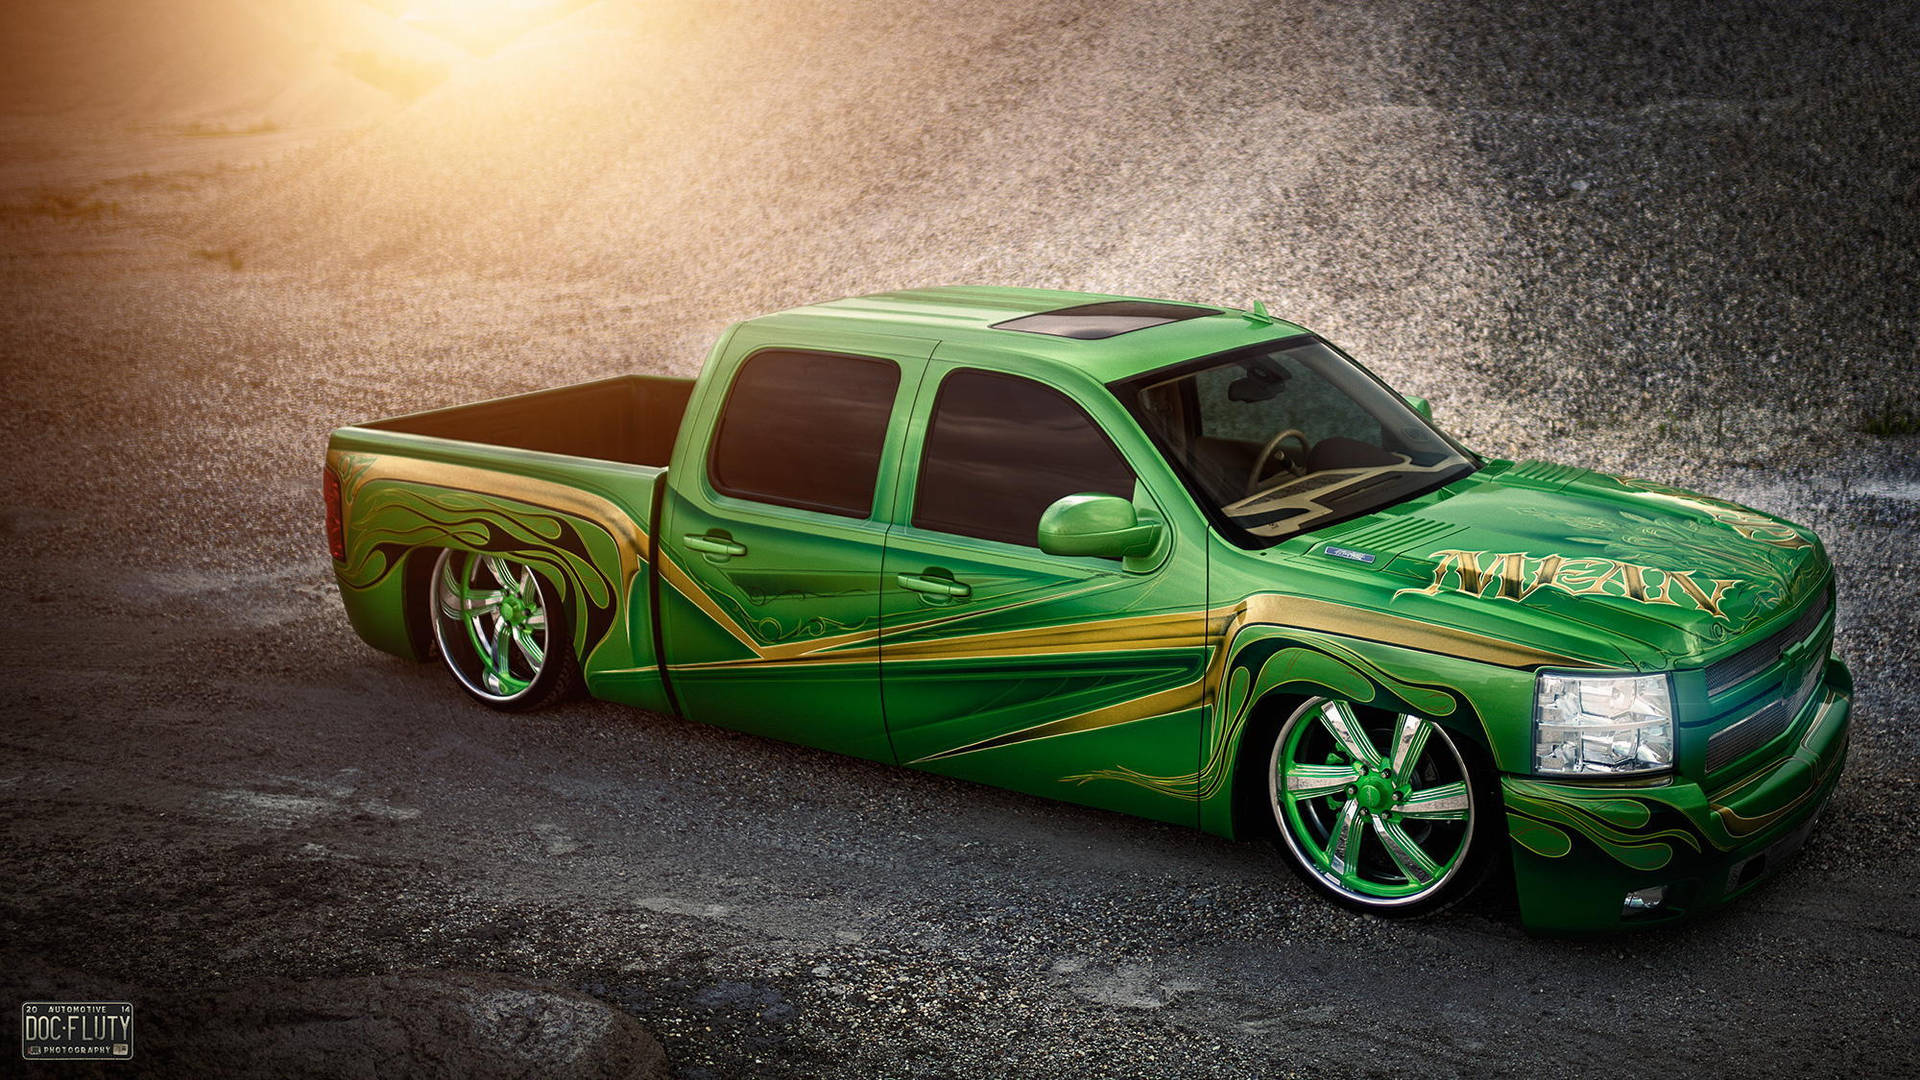 Lowrider Green Chevrolet Silverado Wallpaper